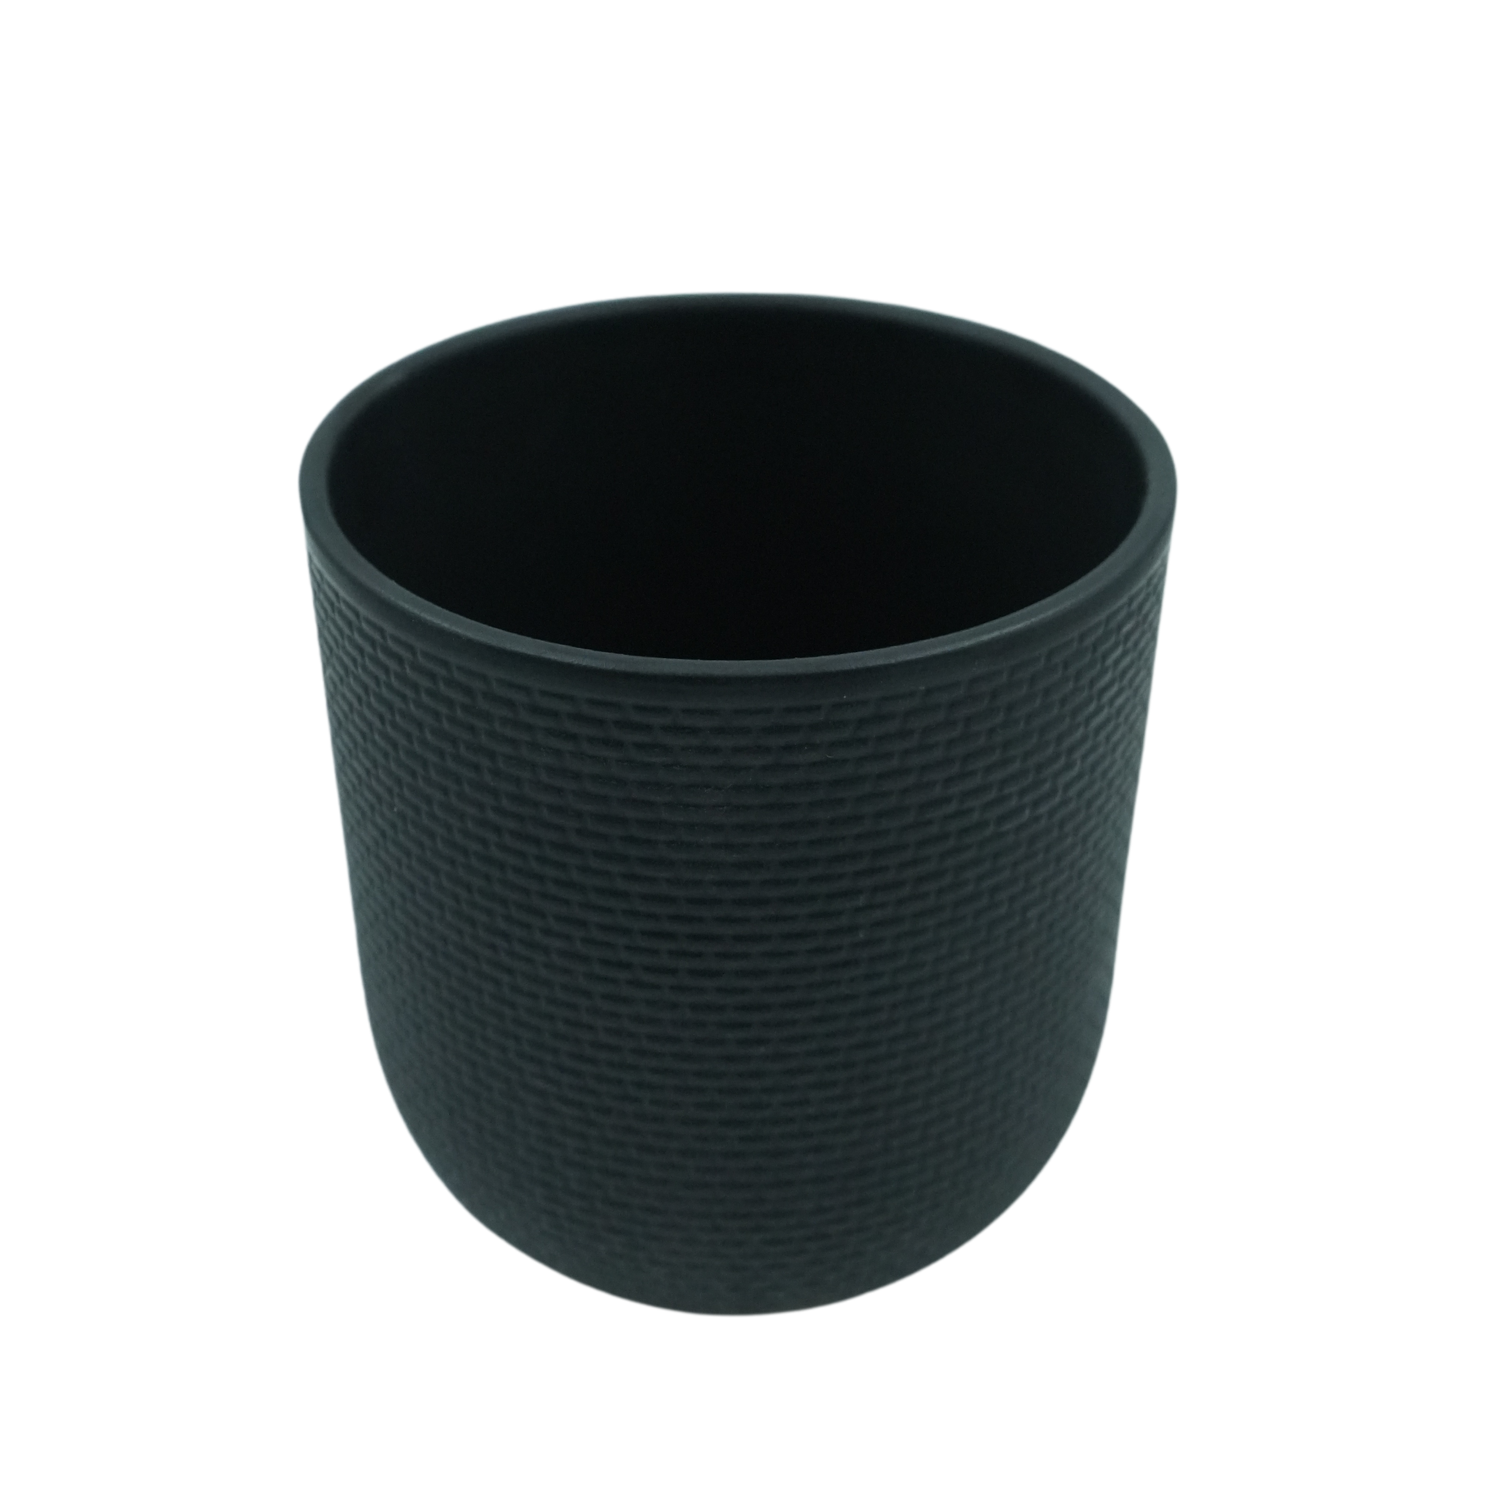 Designer Ceramic Pot (Black, Matt Finish,Small) for Home & Indoor Plant Decor